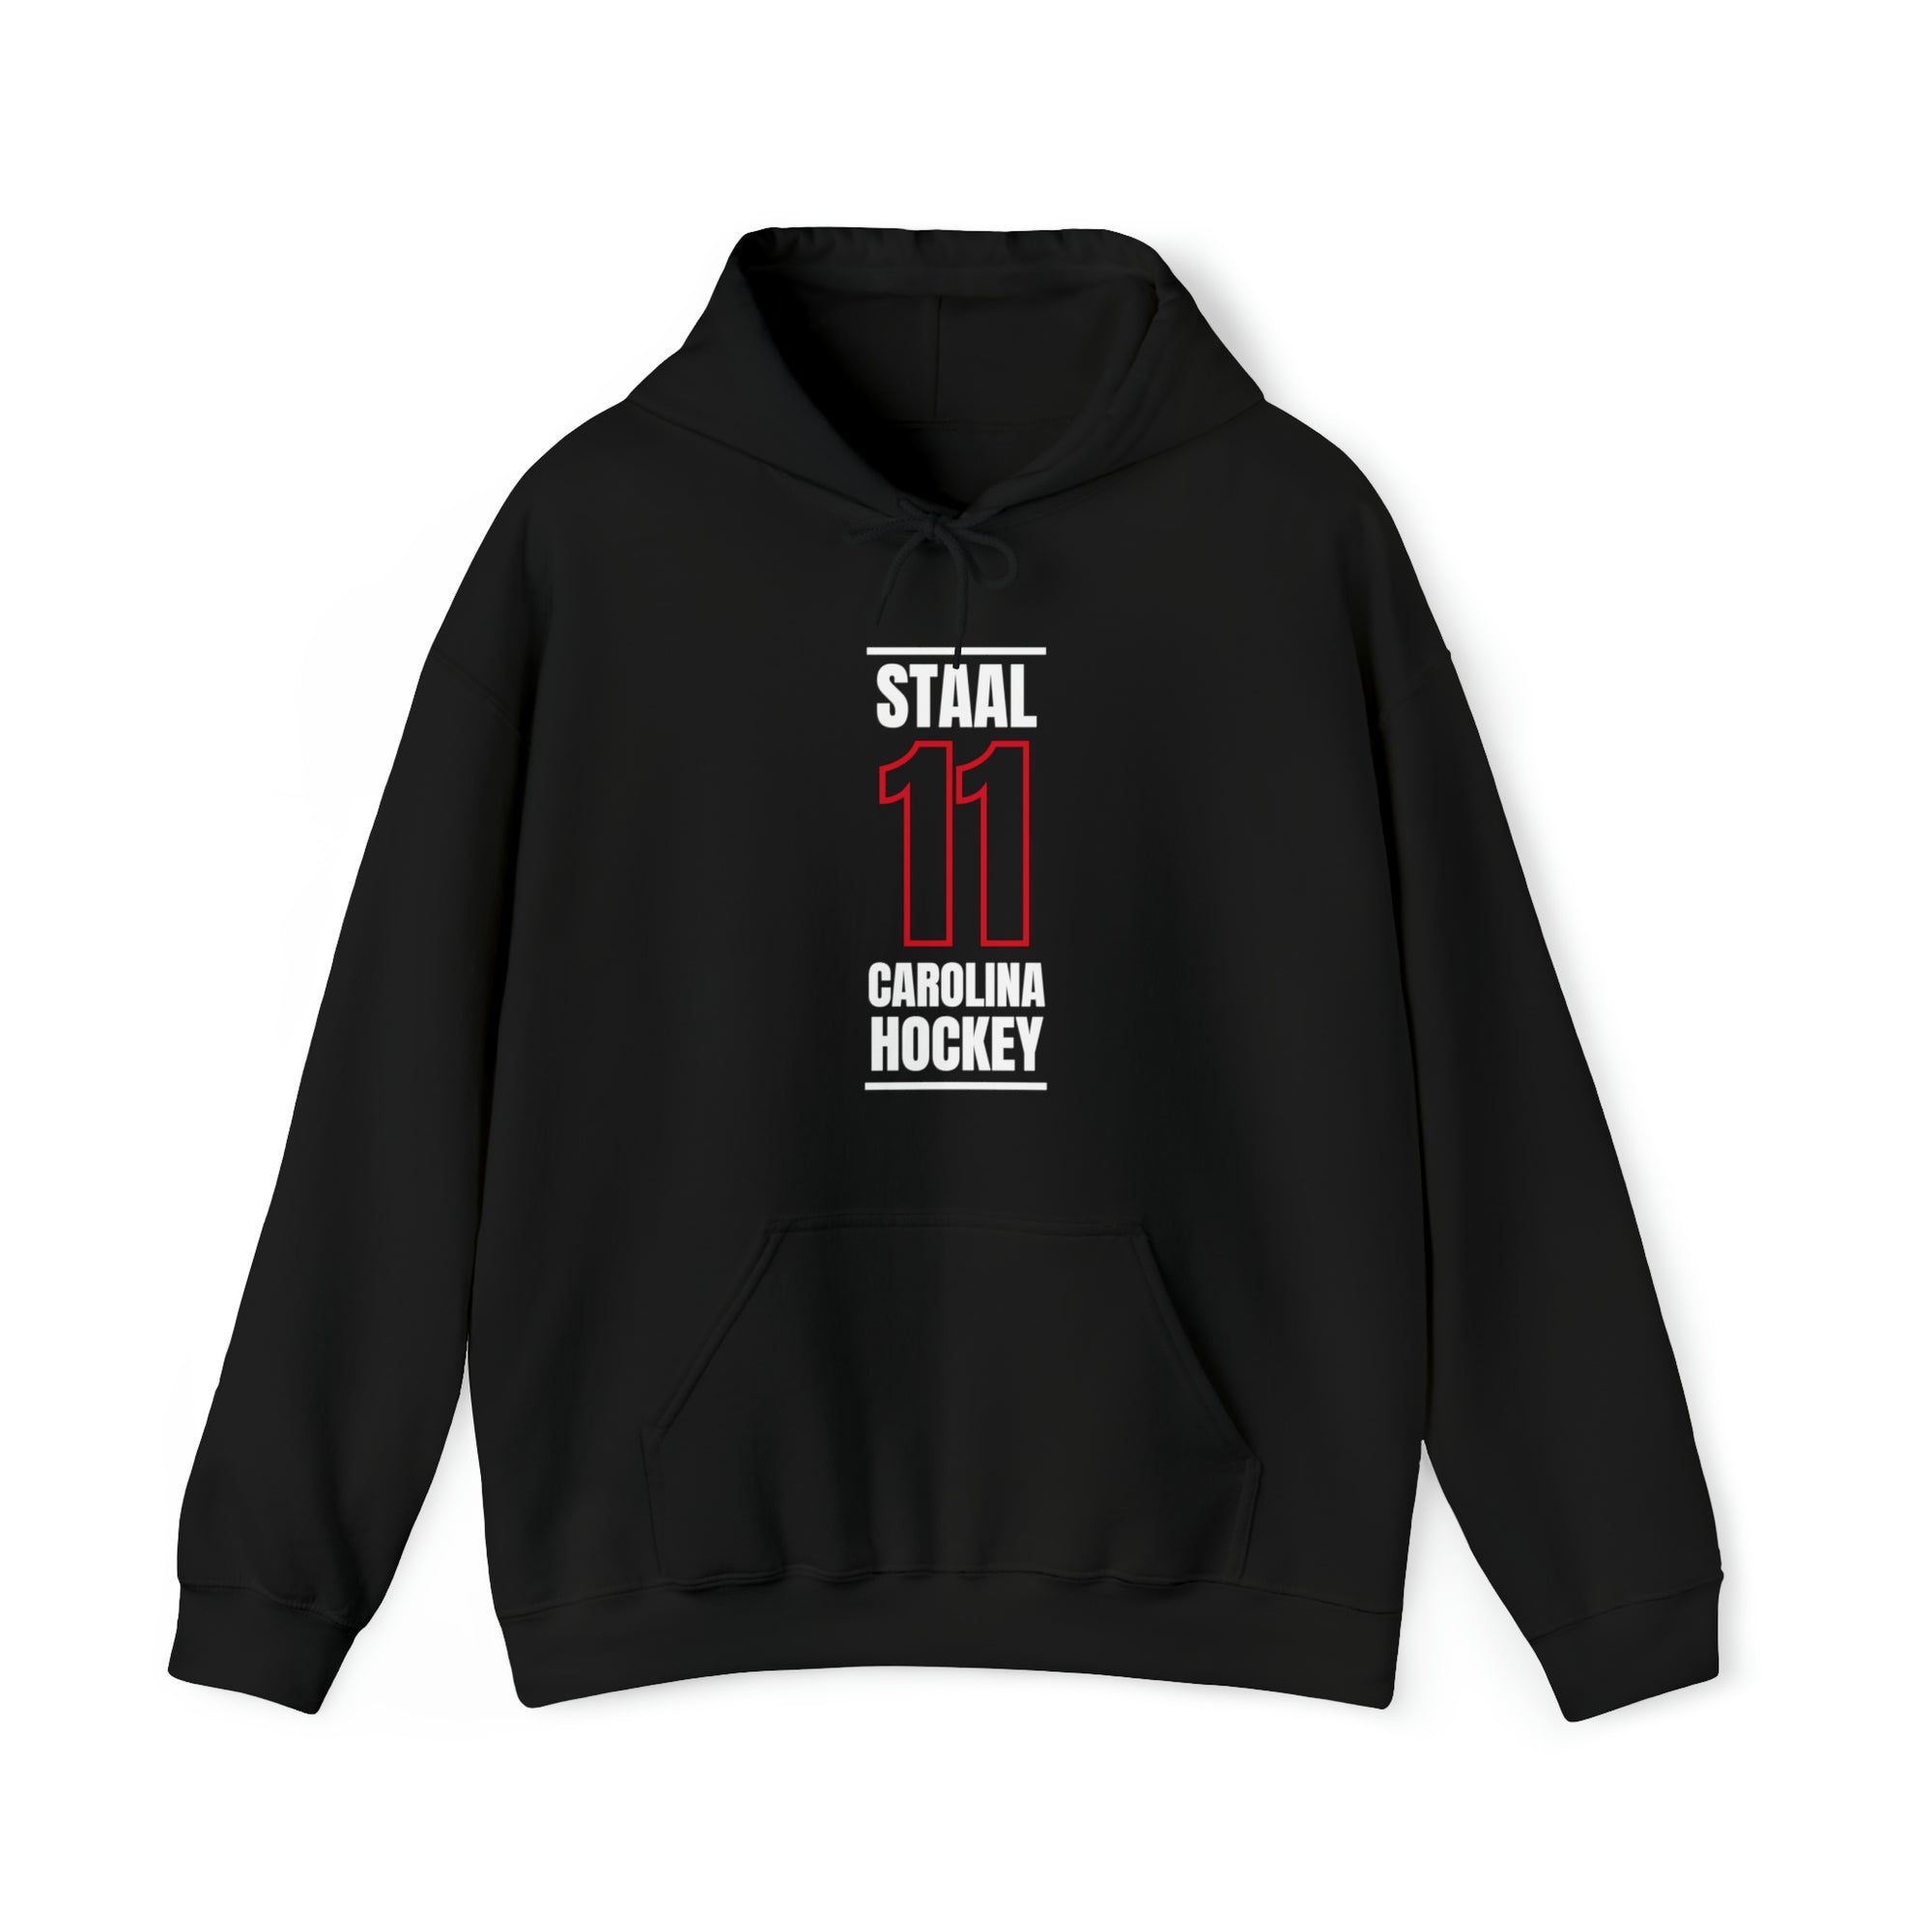 Staal 11 Carolina Hockey Black Vertical Design Unisex Hooded Sweatshirt